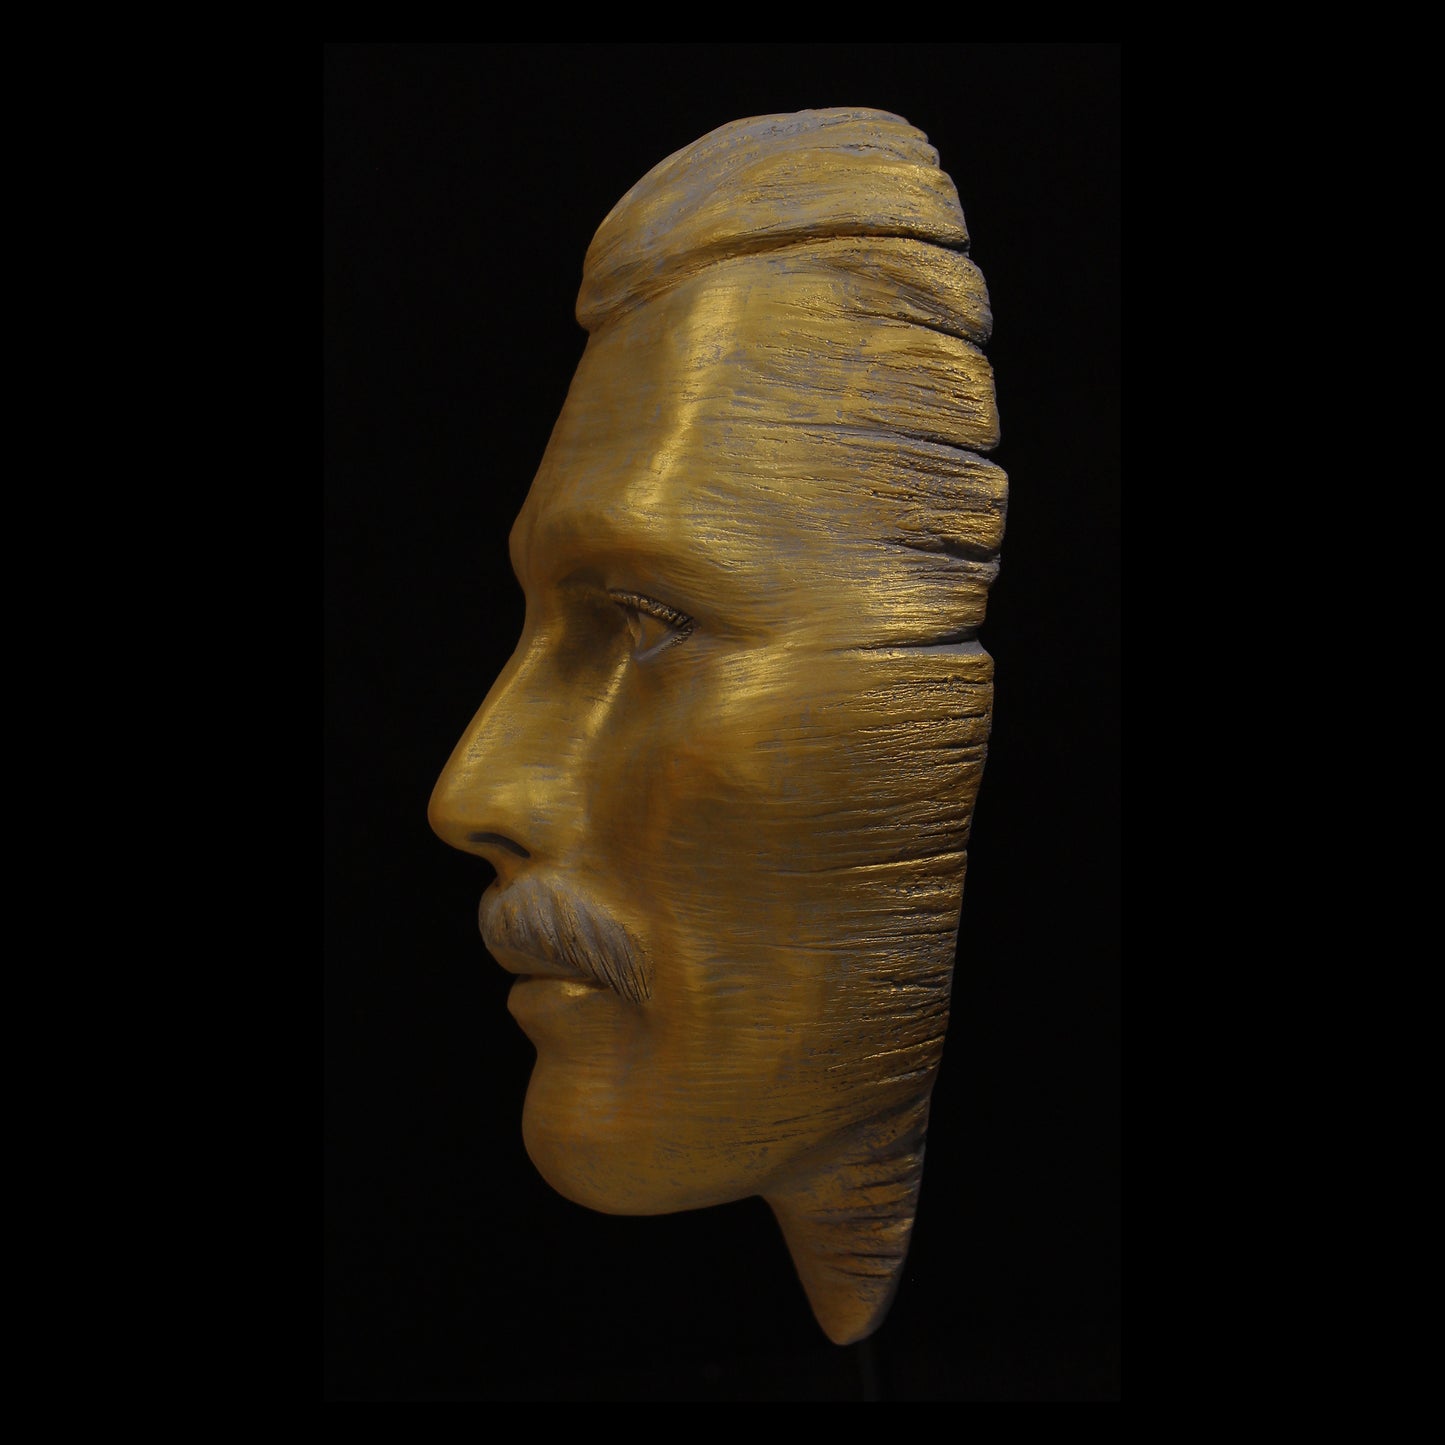 Freddie Mercury - Face Sculpture